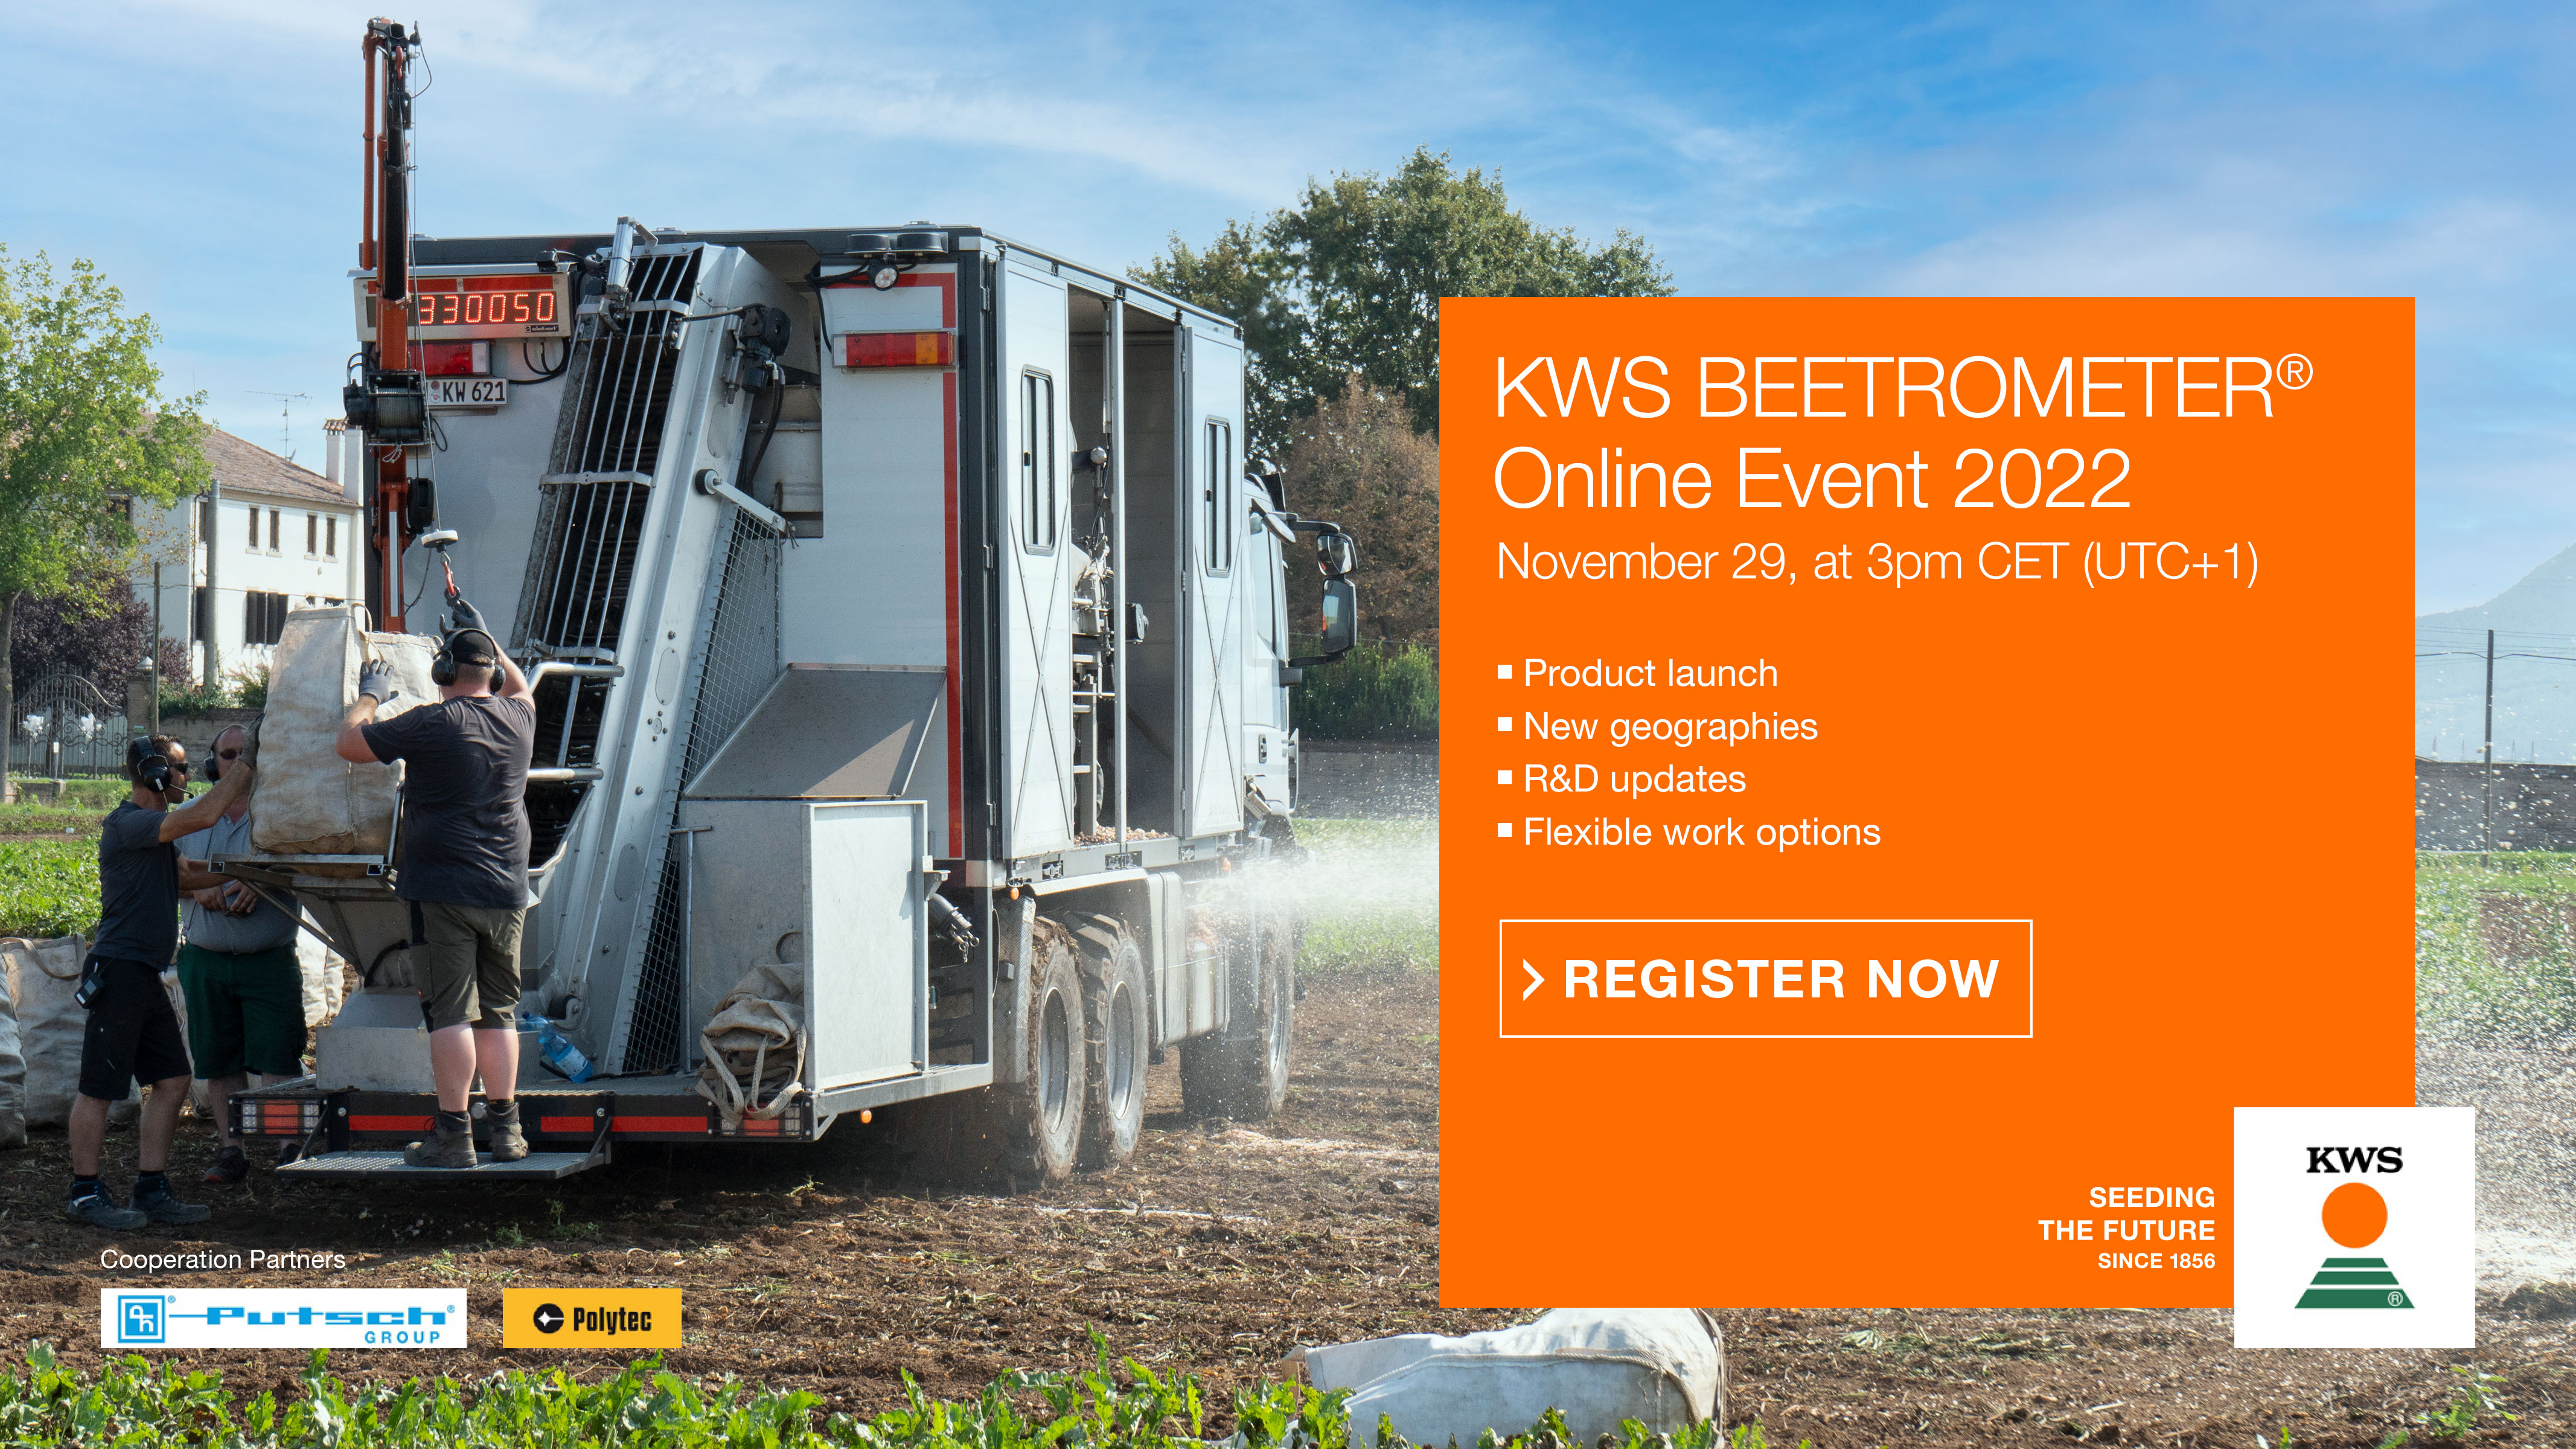 KWS-BEETROMETER®-Online-Event-2022.jpg